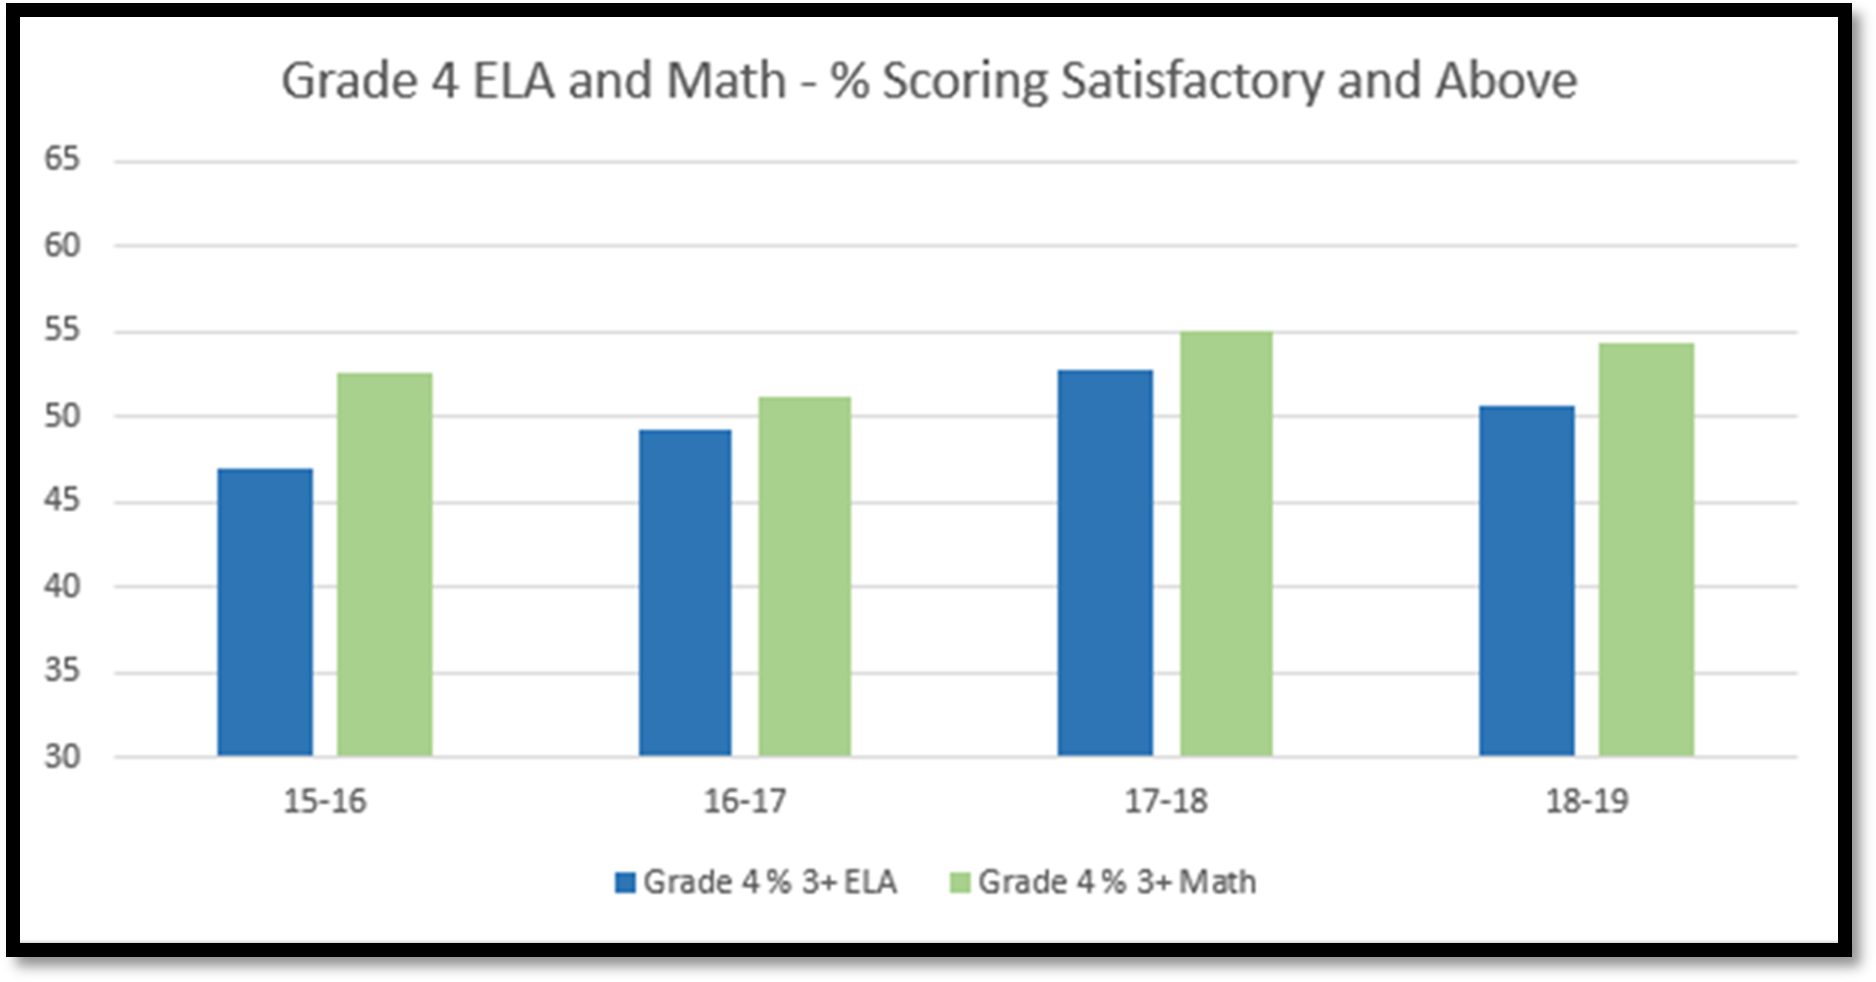 Grade 4 ELA and Math - % Scoring Satisfactory and Above